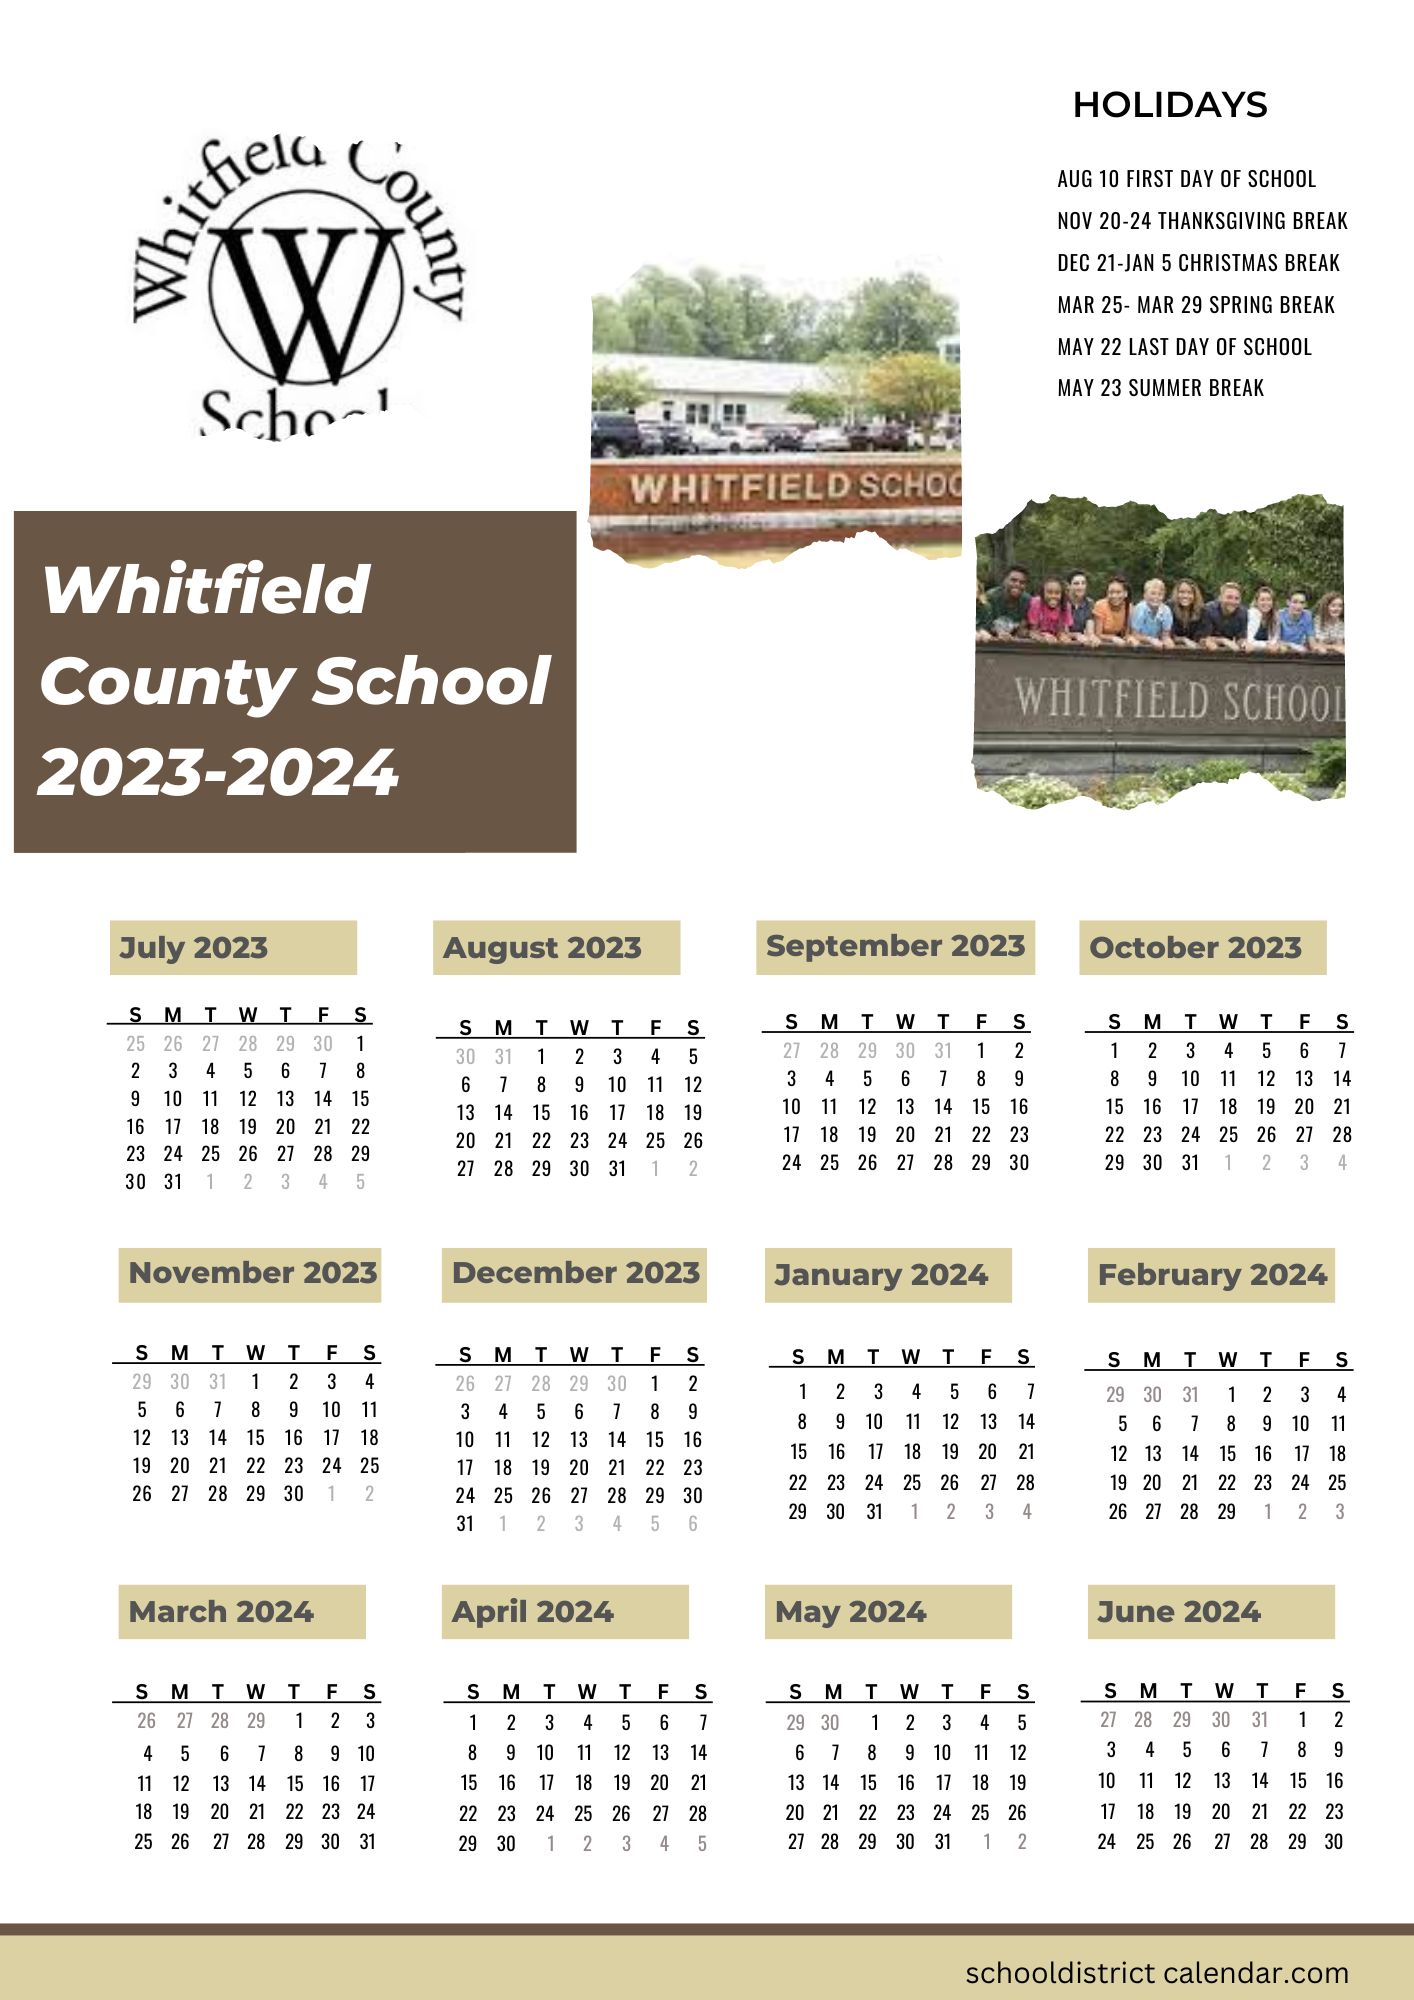 Whitfield County Schools Calendar Holidays 20232024